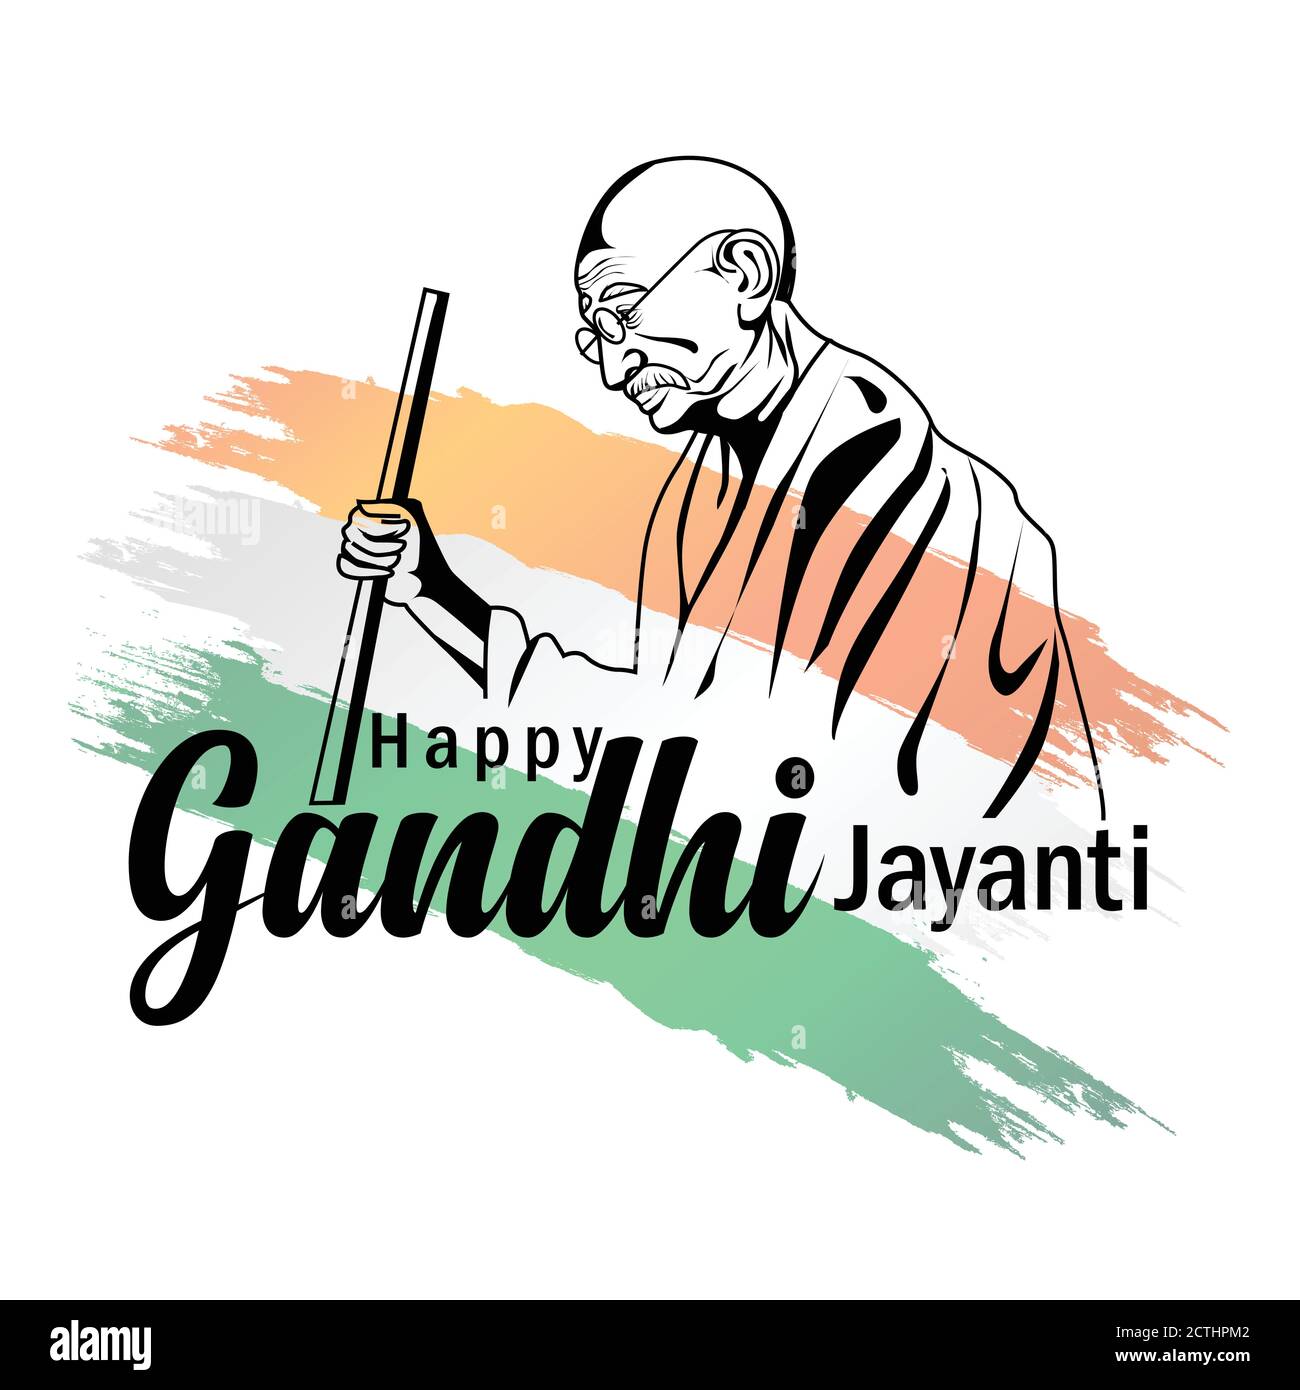 Mahatma Gandhi jayanti - 2020. 2nd October with creative design ...